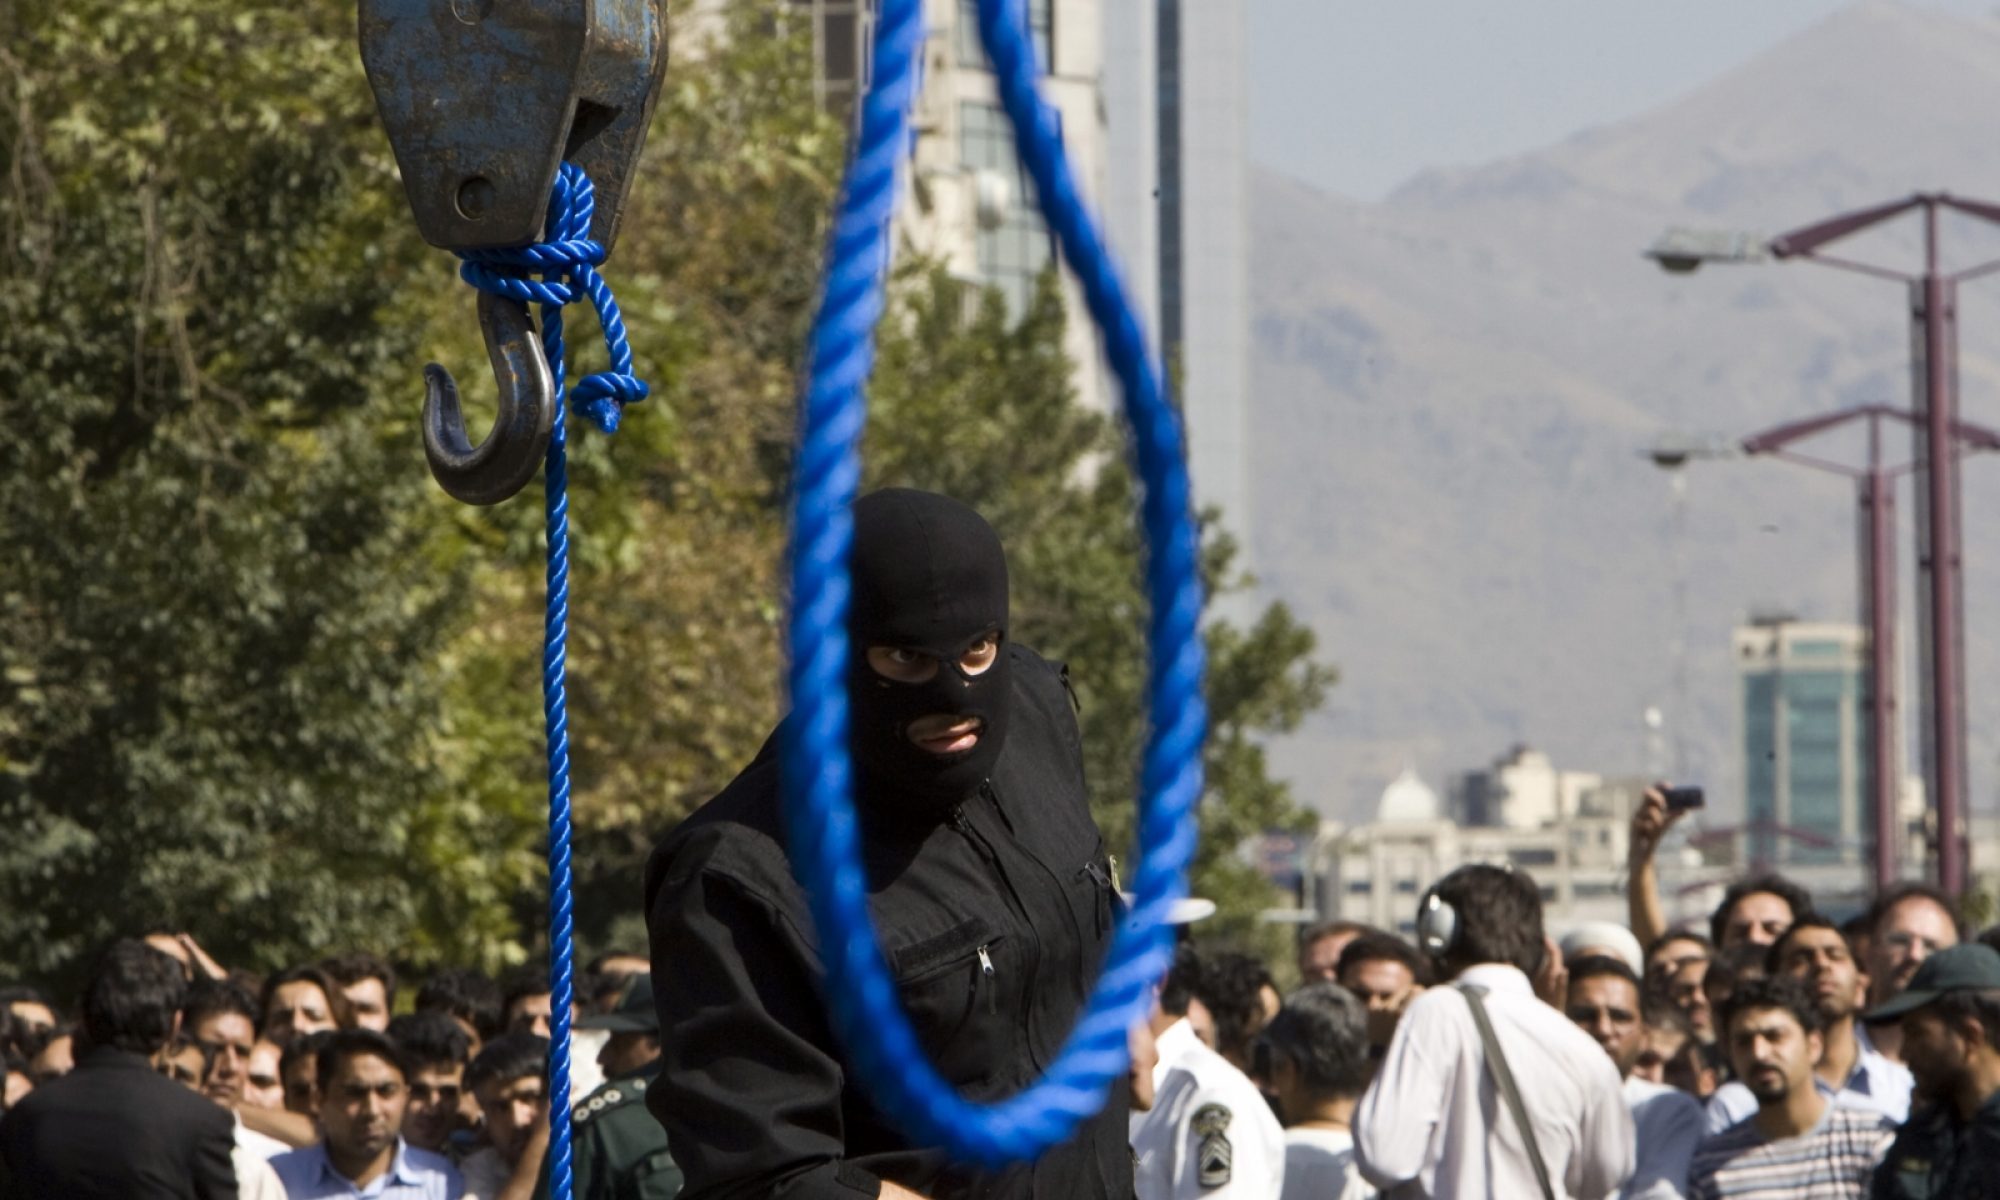 Altı defa alkol içme suçu içleyen adam idam İran'da idam edildi